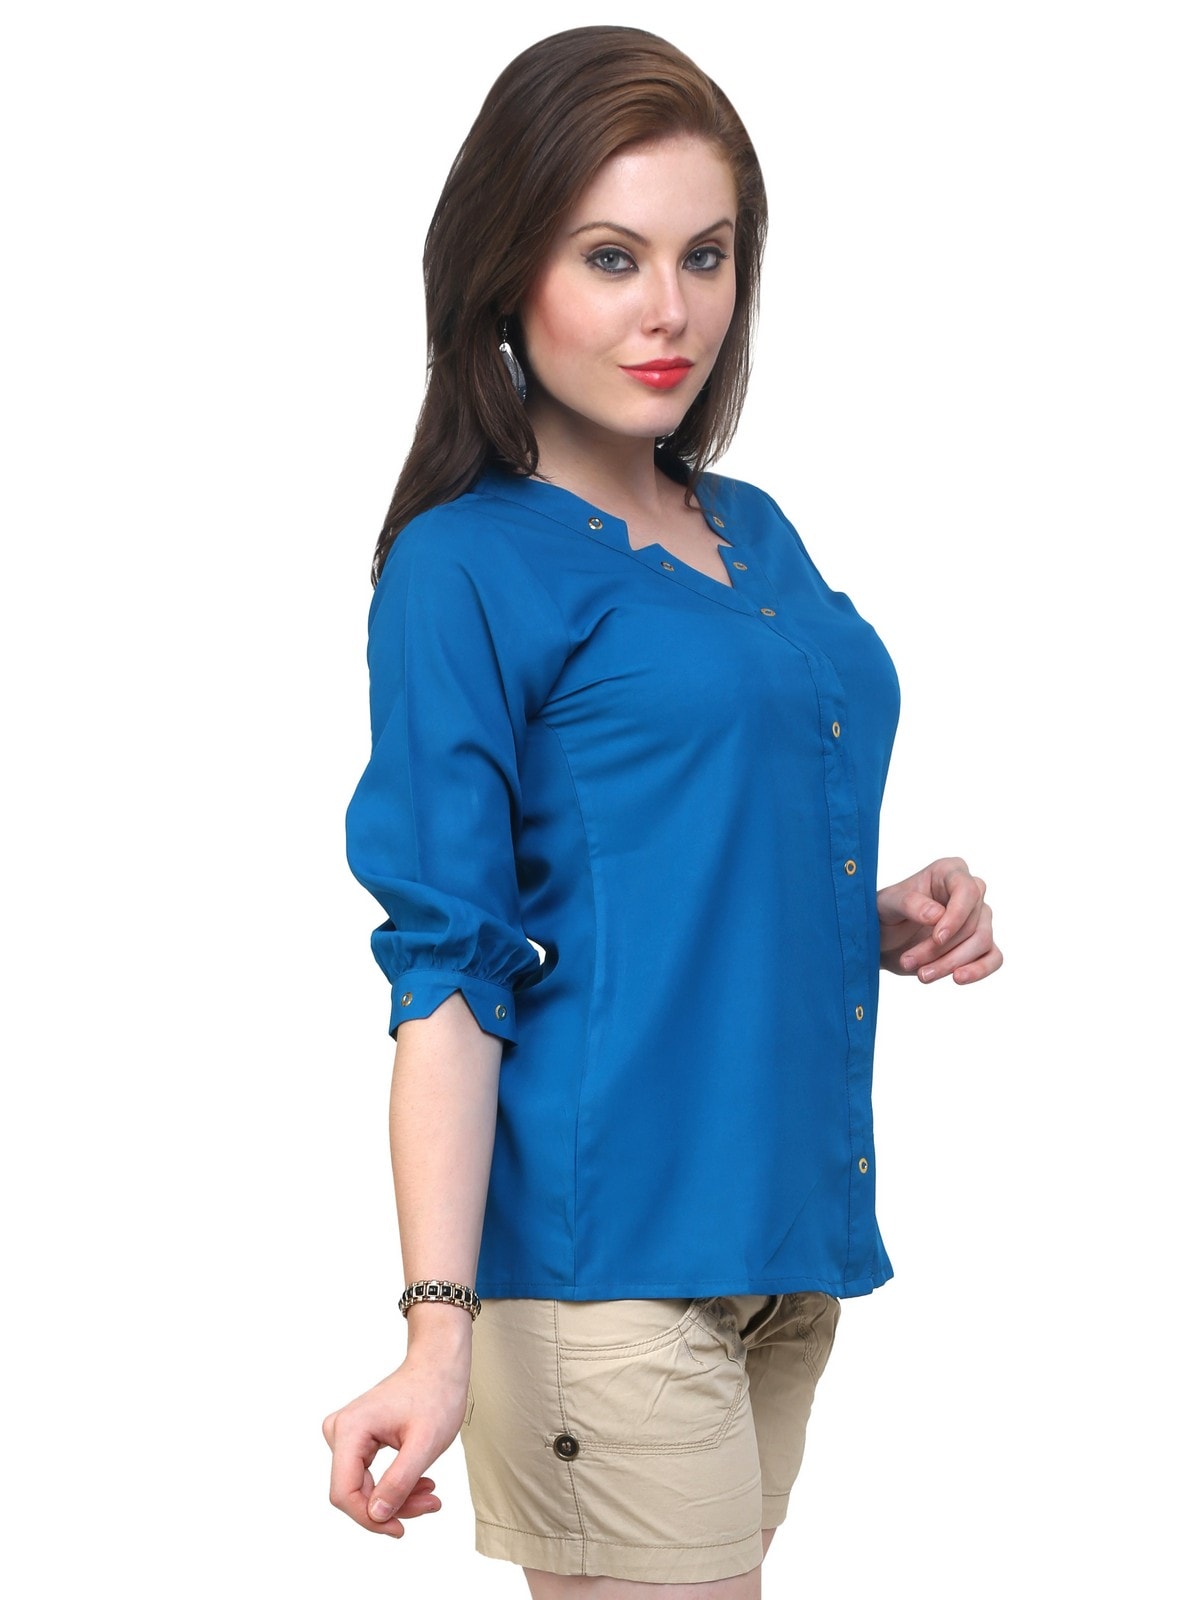 Pannkh Women's Blue Shirt Top With Detailed Notch Designs